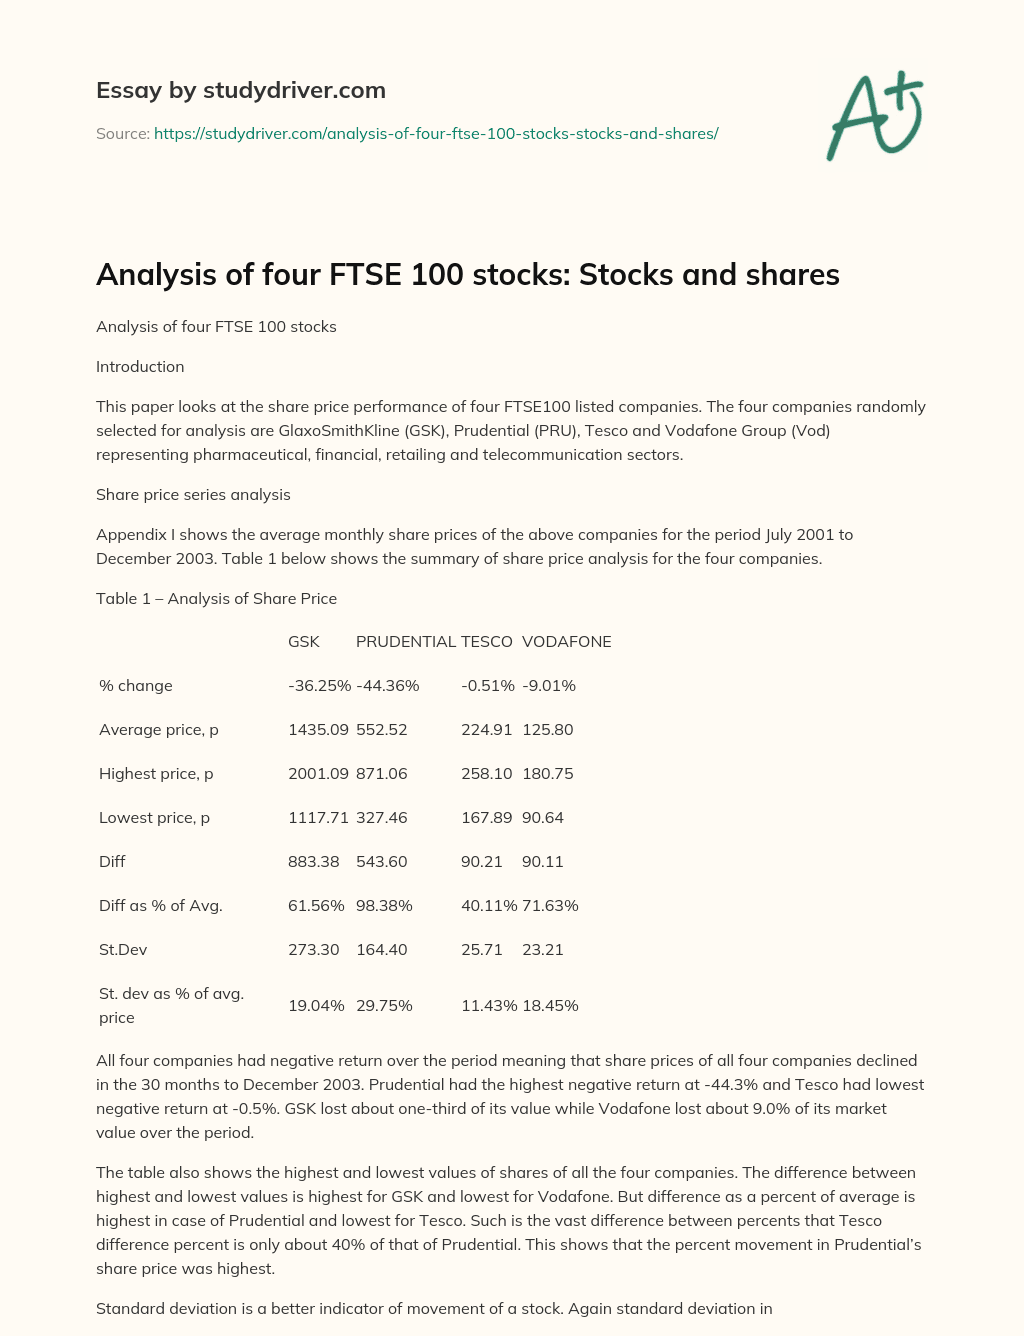 Analysis of Four FTSE 100 Stocks: Stocks and Shares essay